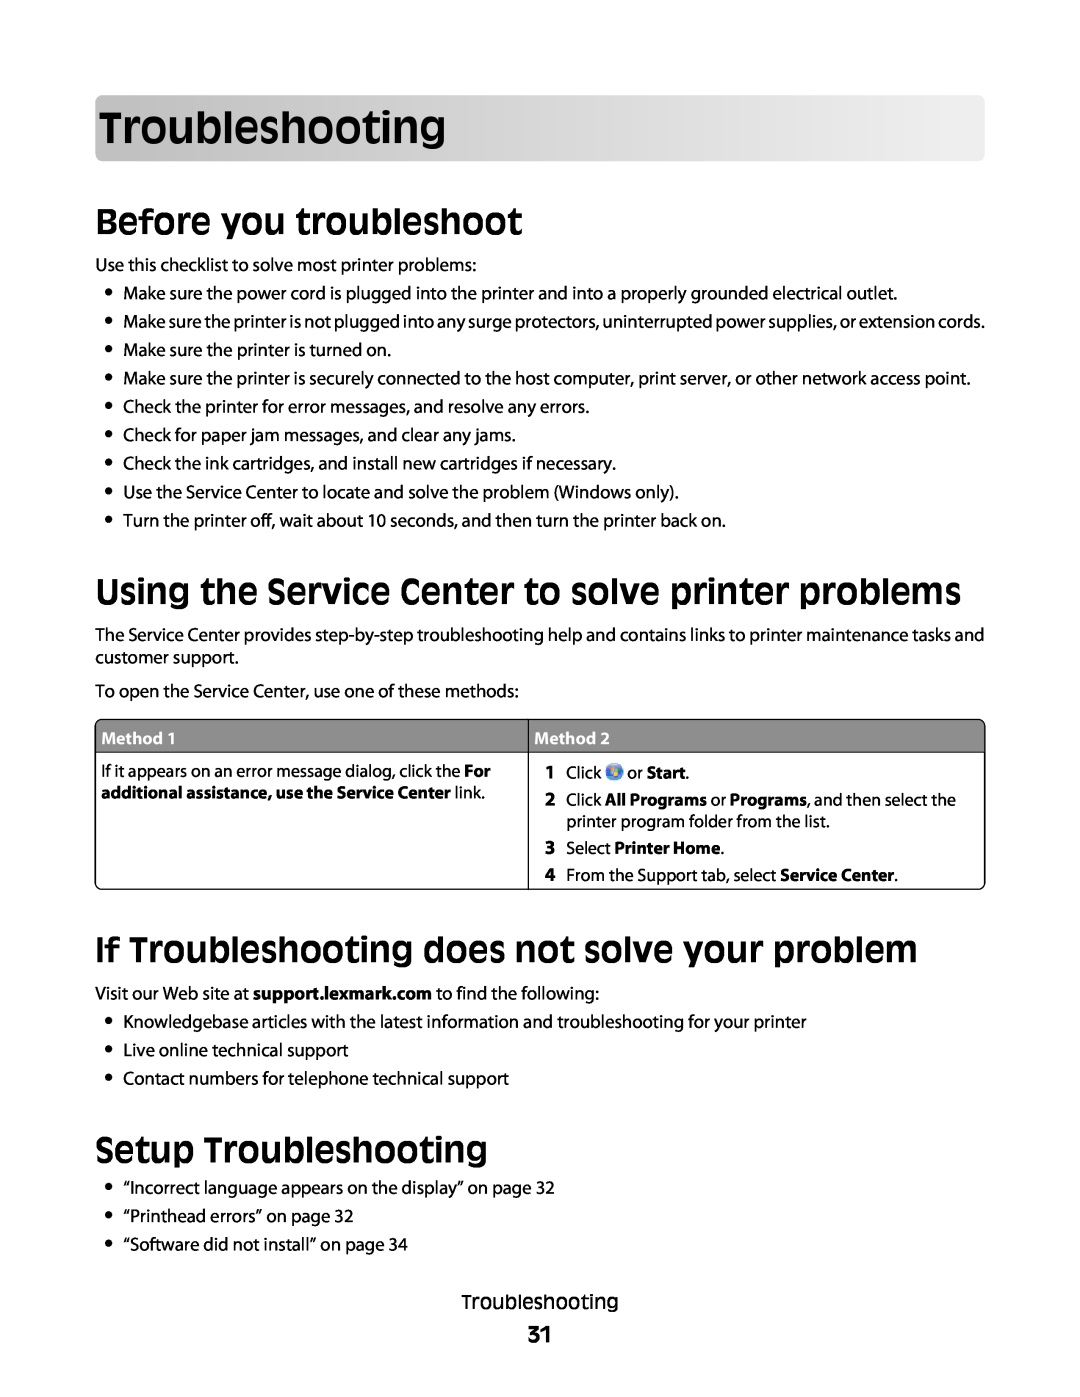 Lexmark Pro205, Pro208 Before you troubleshoot, If Troubleshooting does not solve your problem, Setup Troubleshooting 